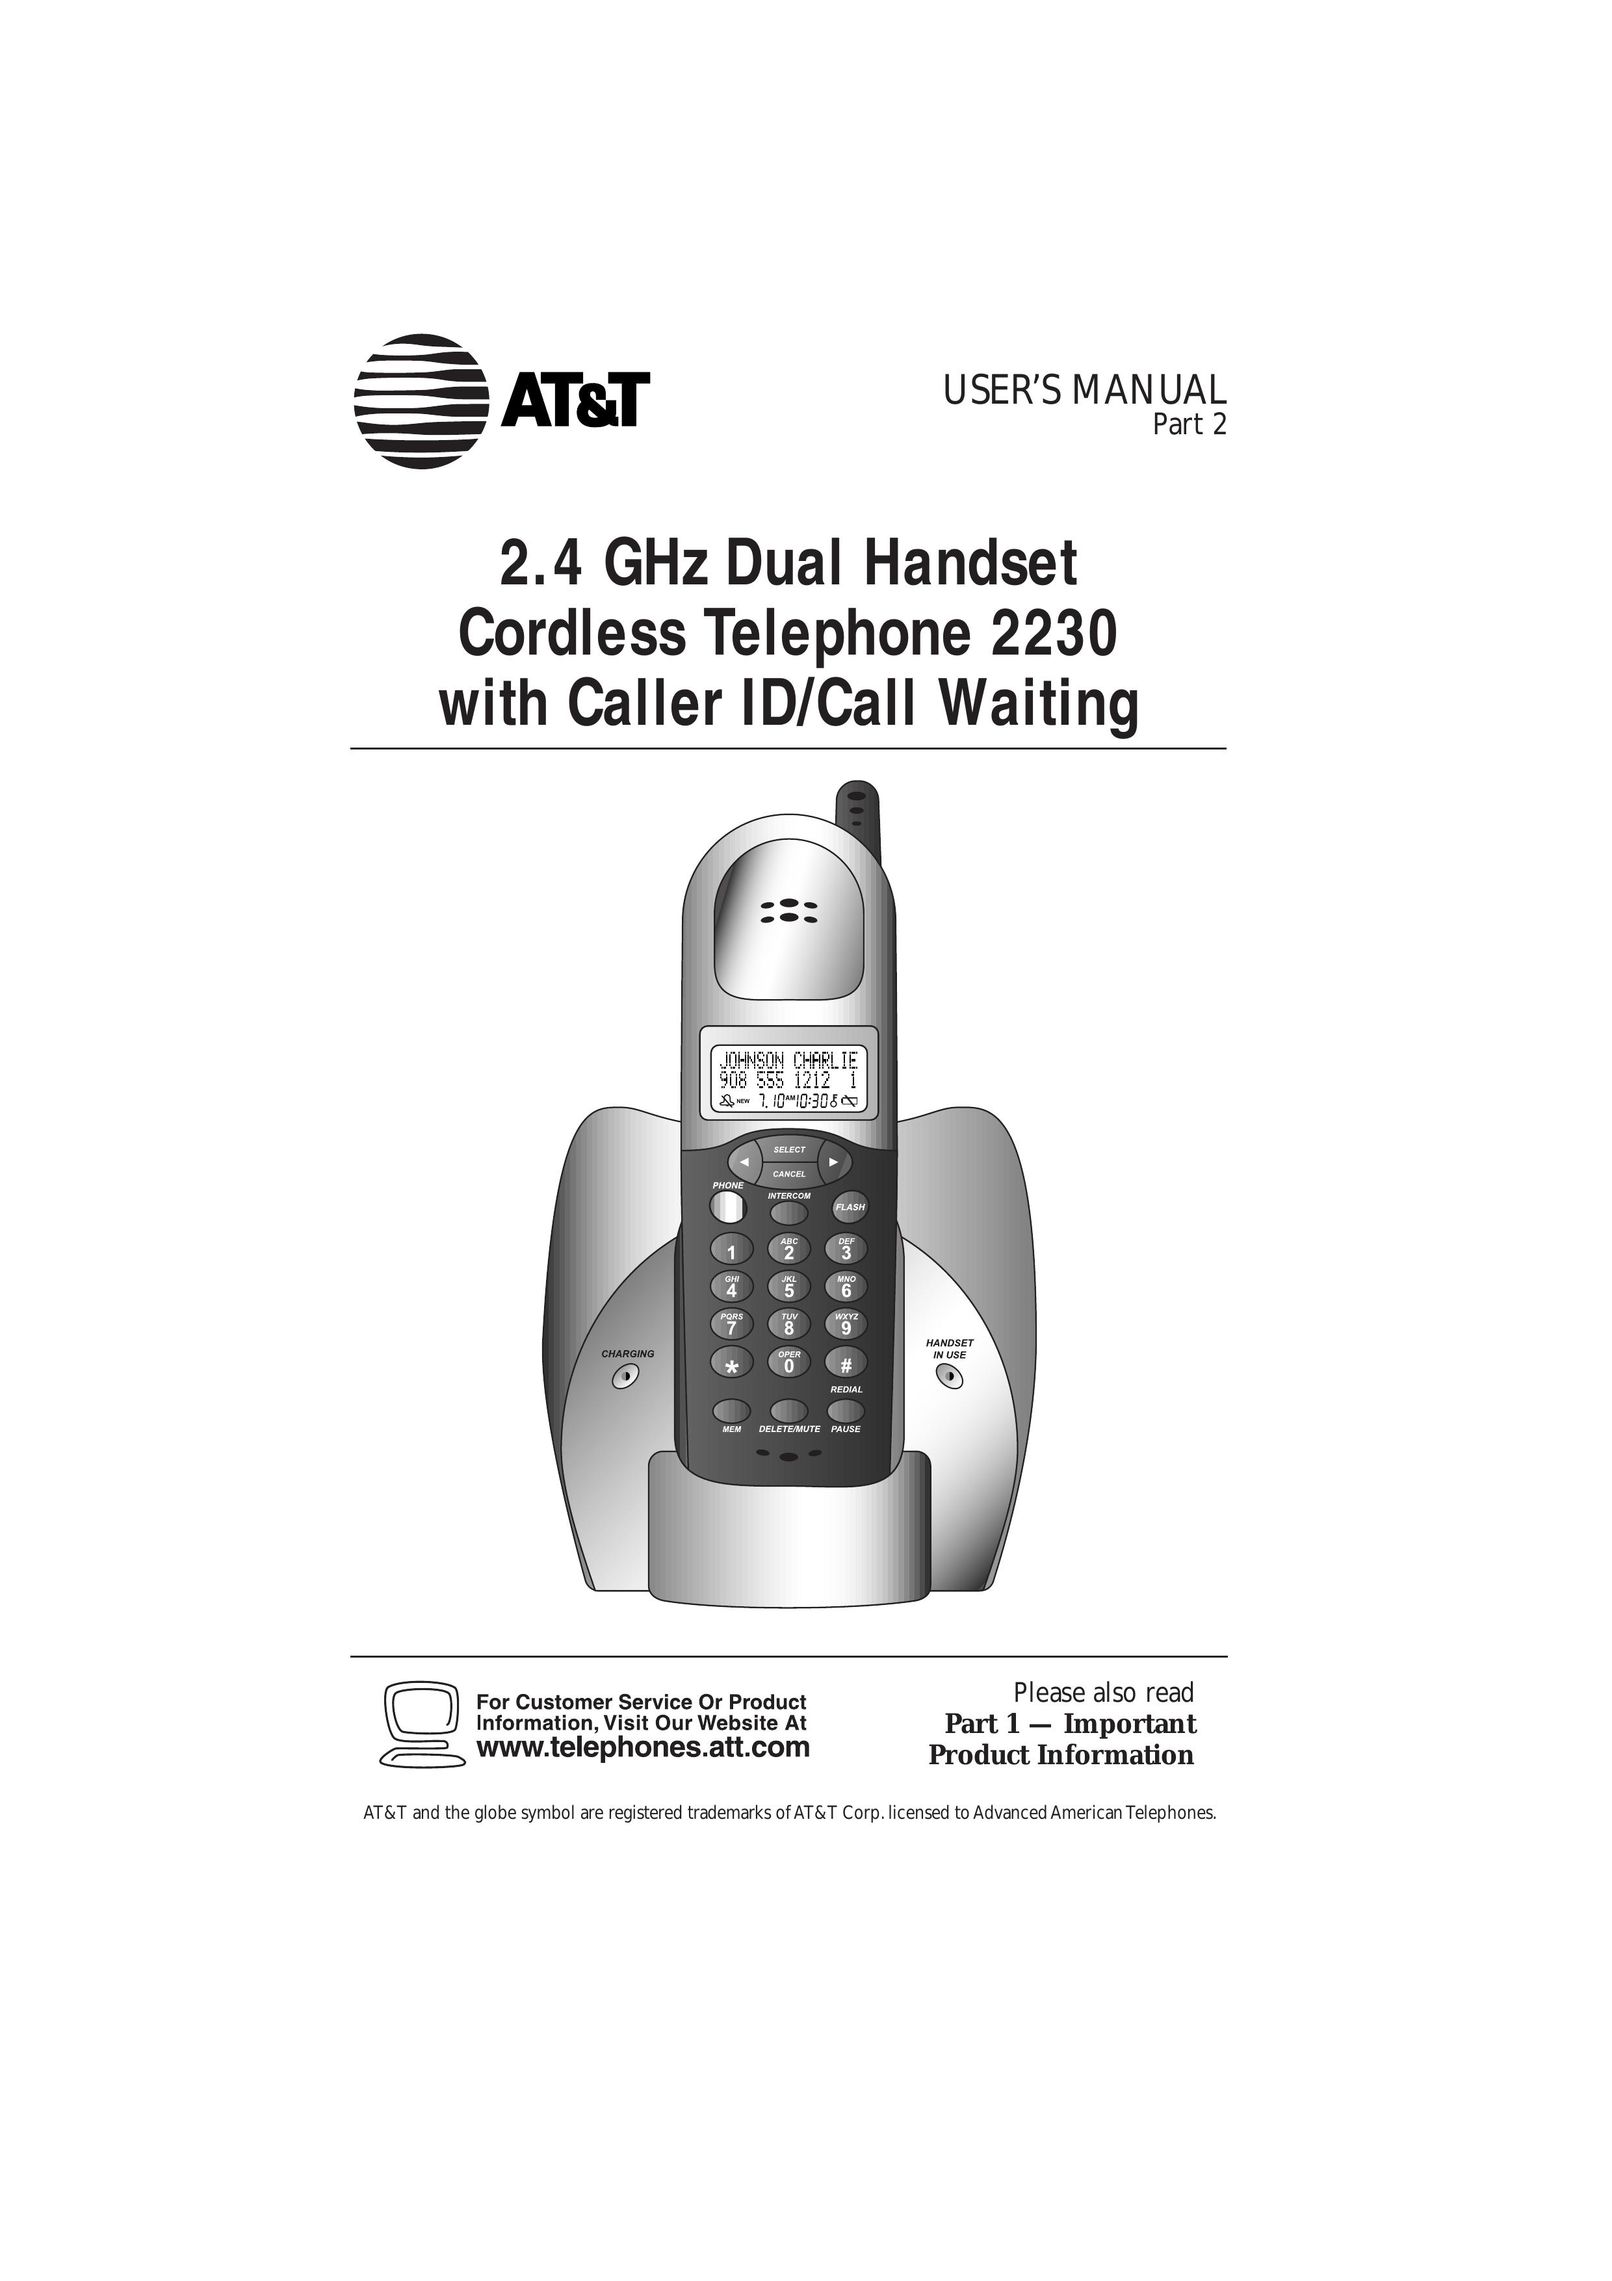 AT&T 2230 Cordless Telephone User Manual